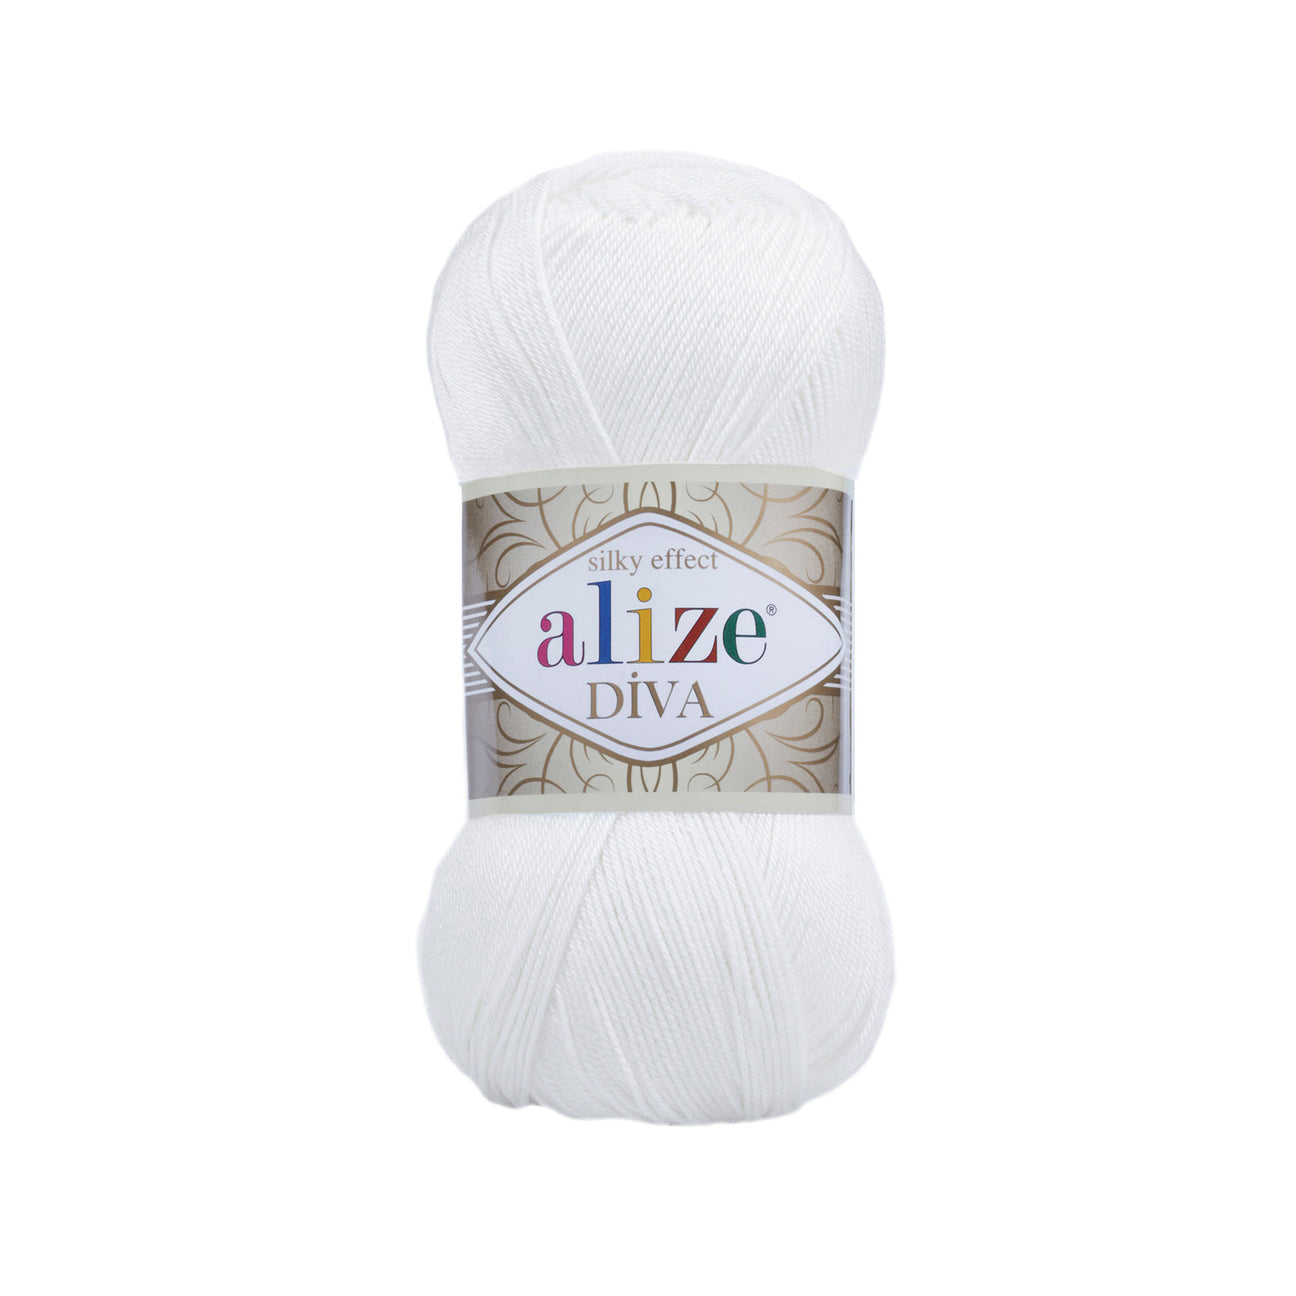 Alize Diva Silk Yarn - Microfiber Acrylic Sport Weight Yarn - Lightweight & Soft Yarn for Crocheting & Knitting Scarves, Clothes & Crafts - 1 Skein